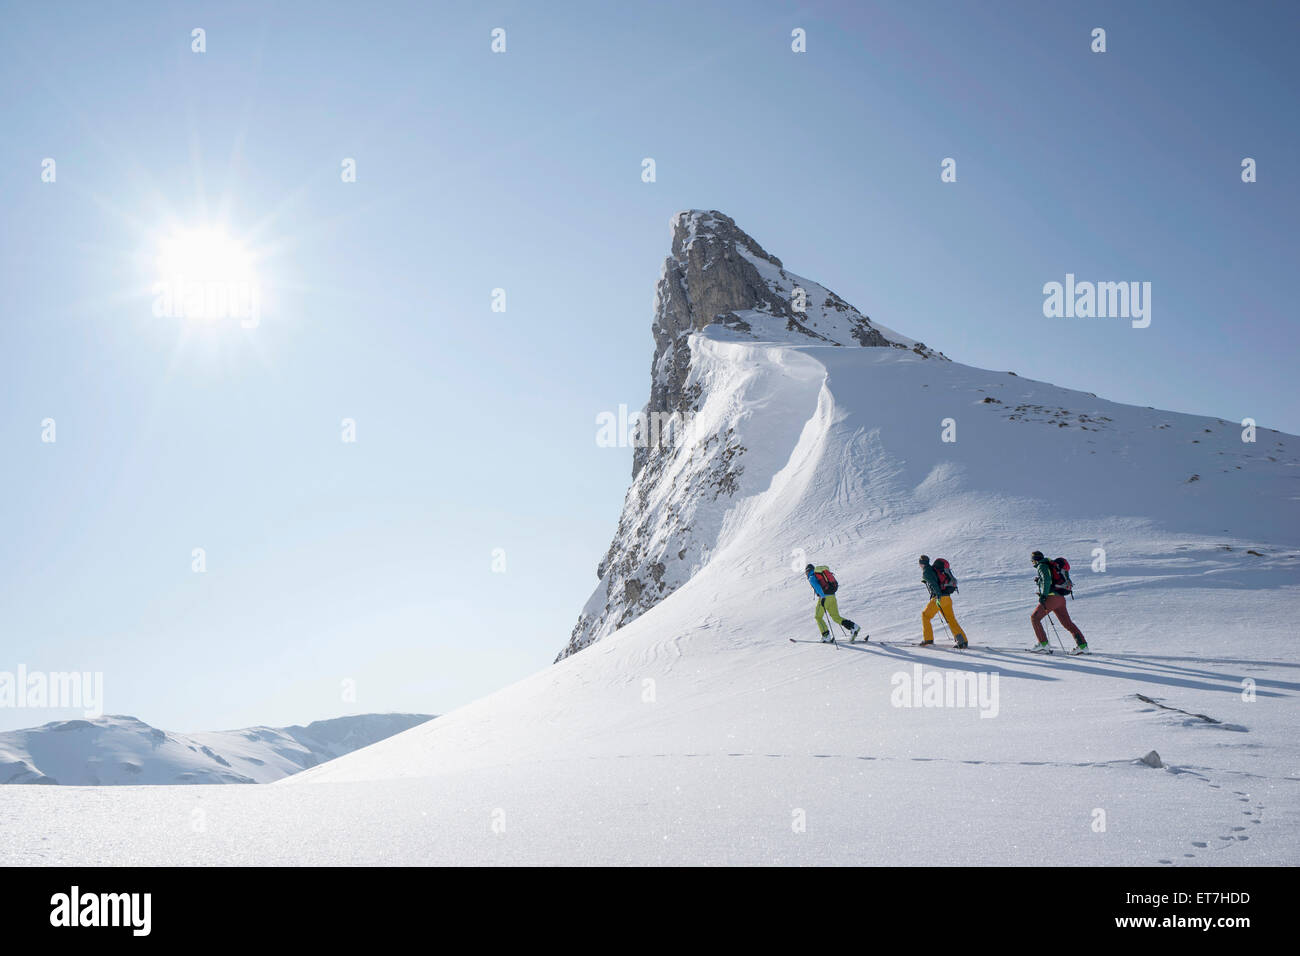 Ski mountaineers climbing on snowy peak, Tyrol, Austria Stock Photo